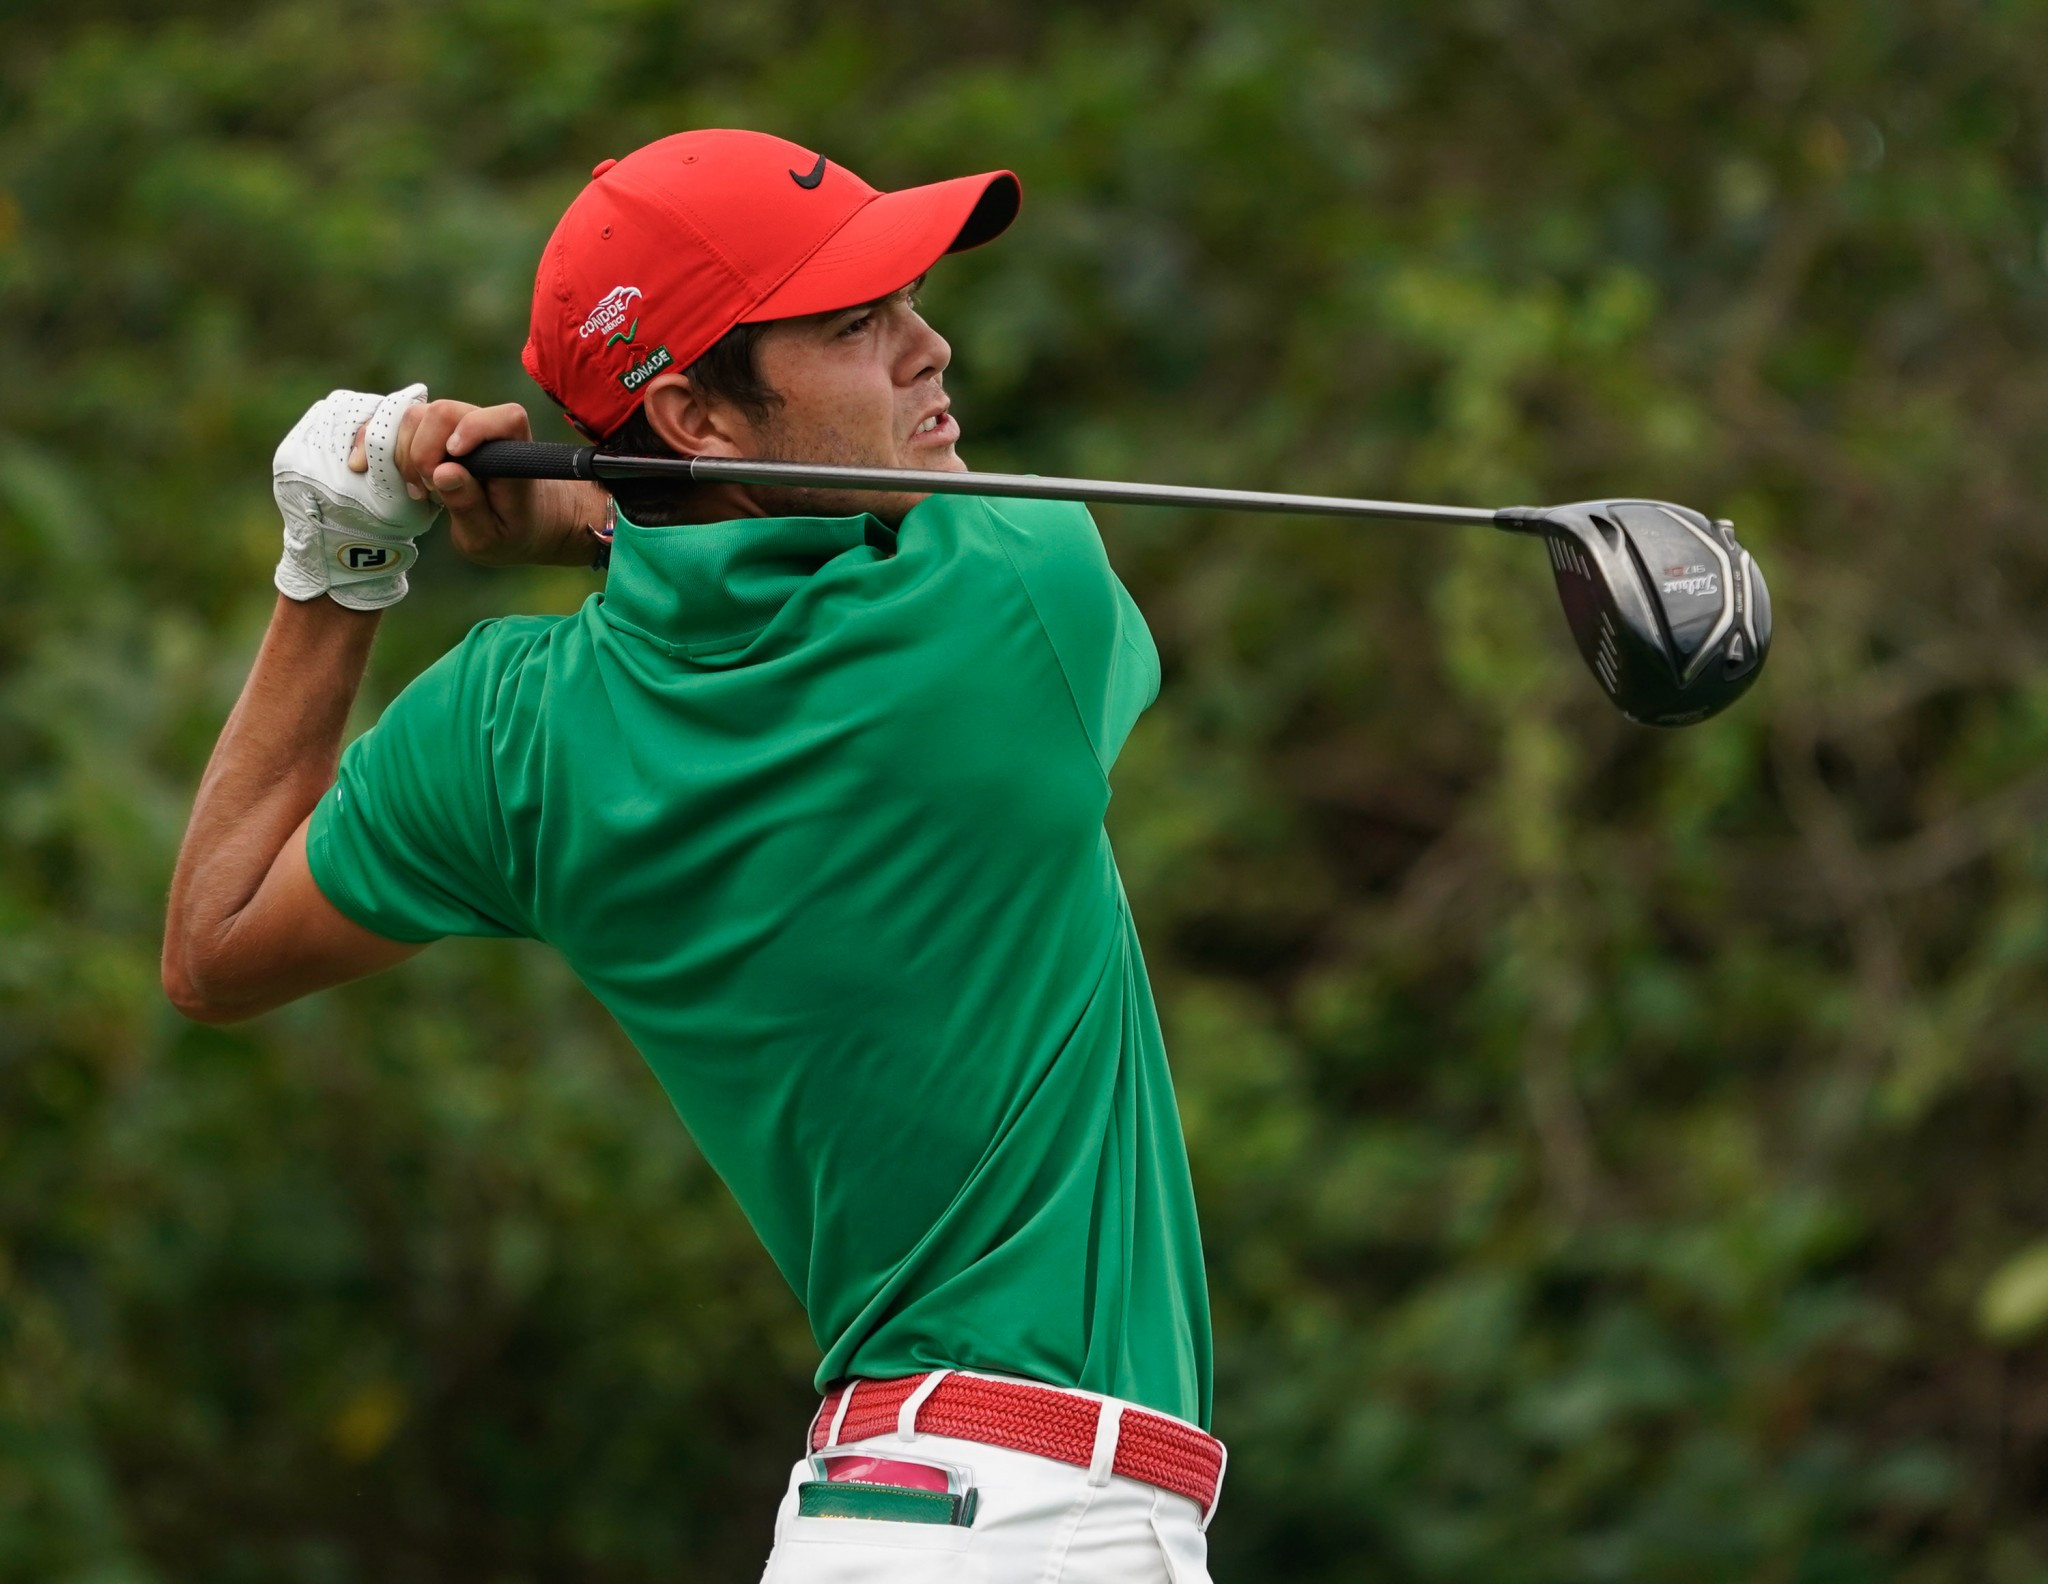 Raul Pereda De La Huerta won the men's golf gold medal ©Taipei 2017